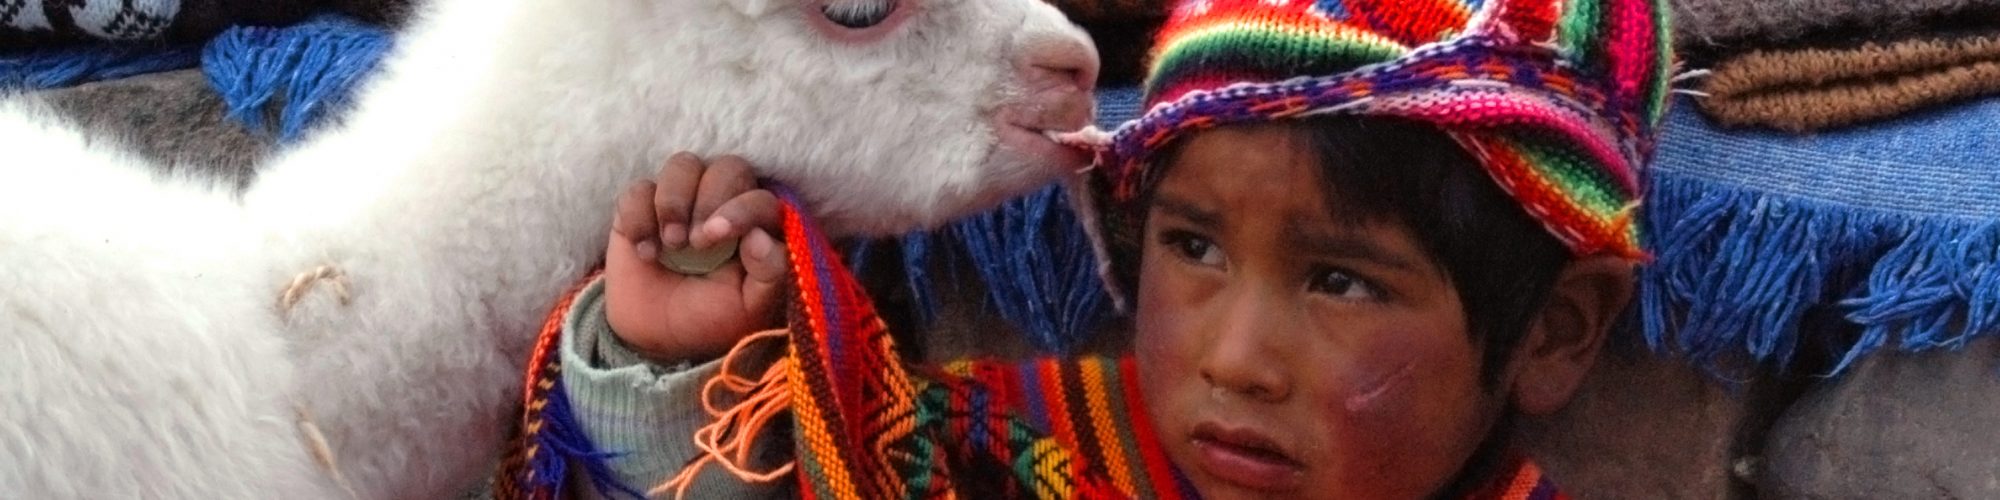 Peru - Arequipa - child with lama